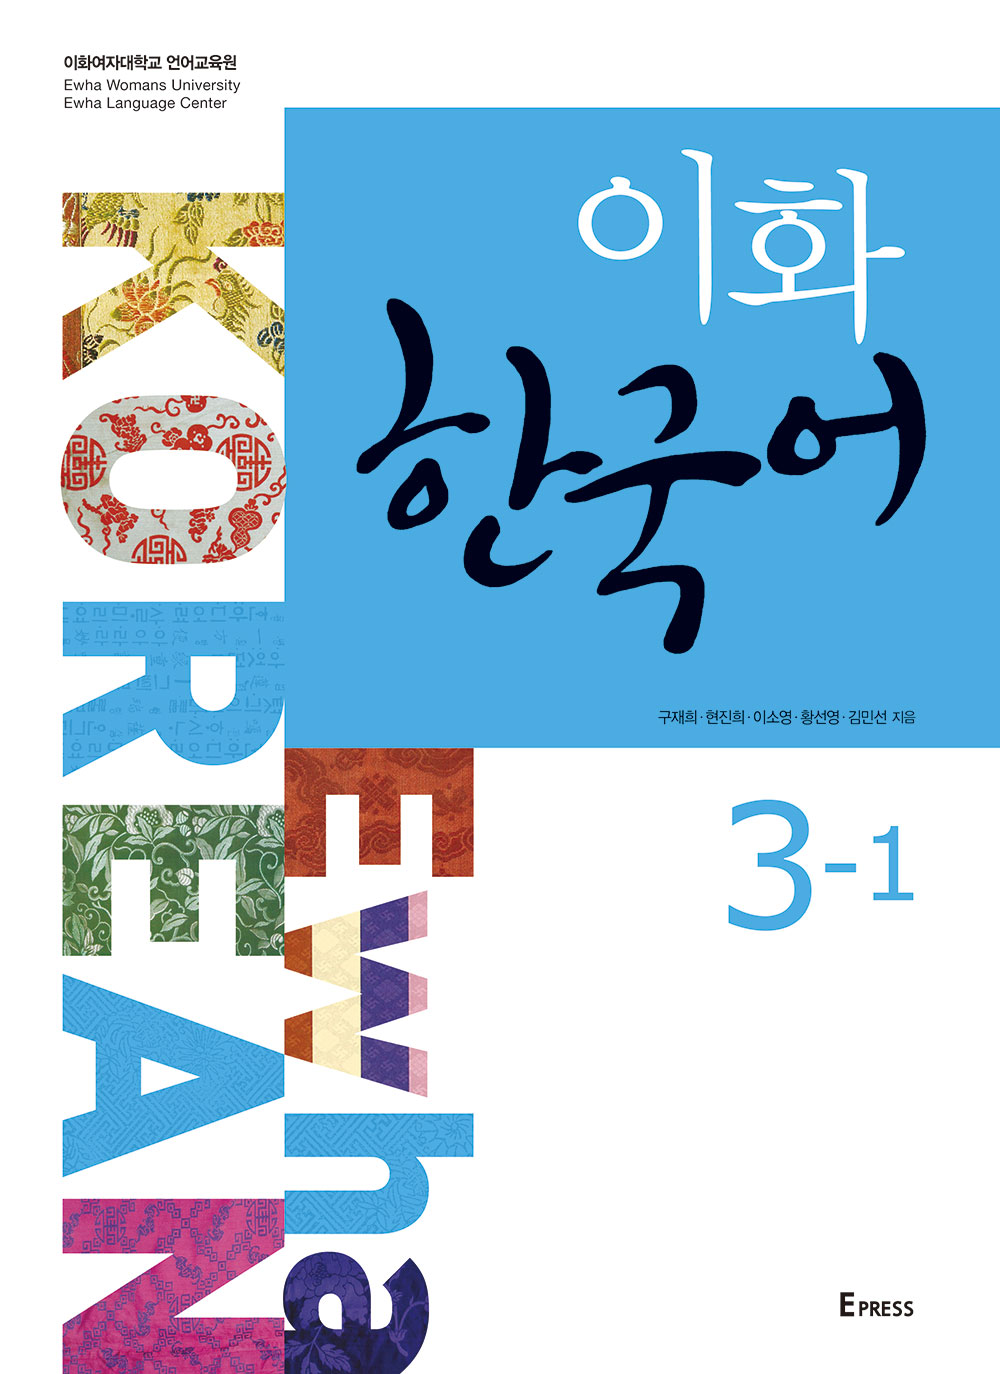  [EBOOK] Ewha Korean 3-1 도서이미지